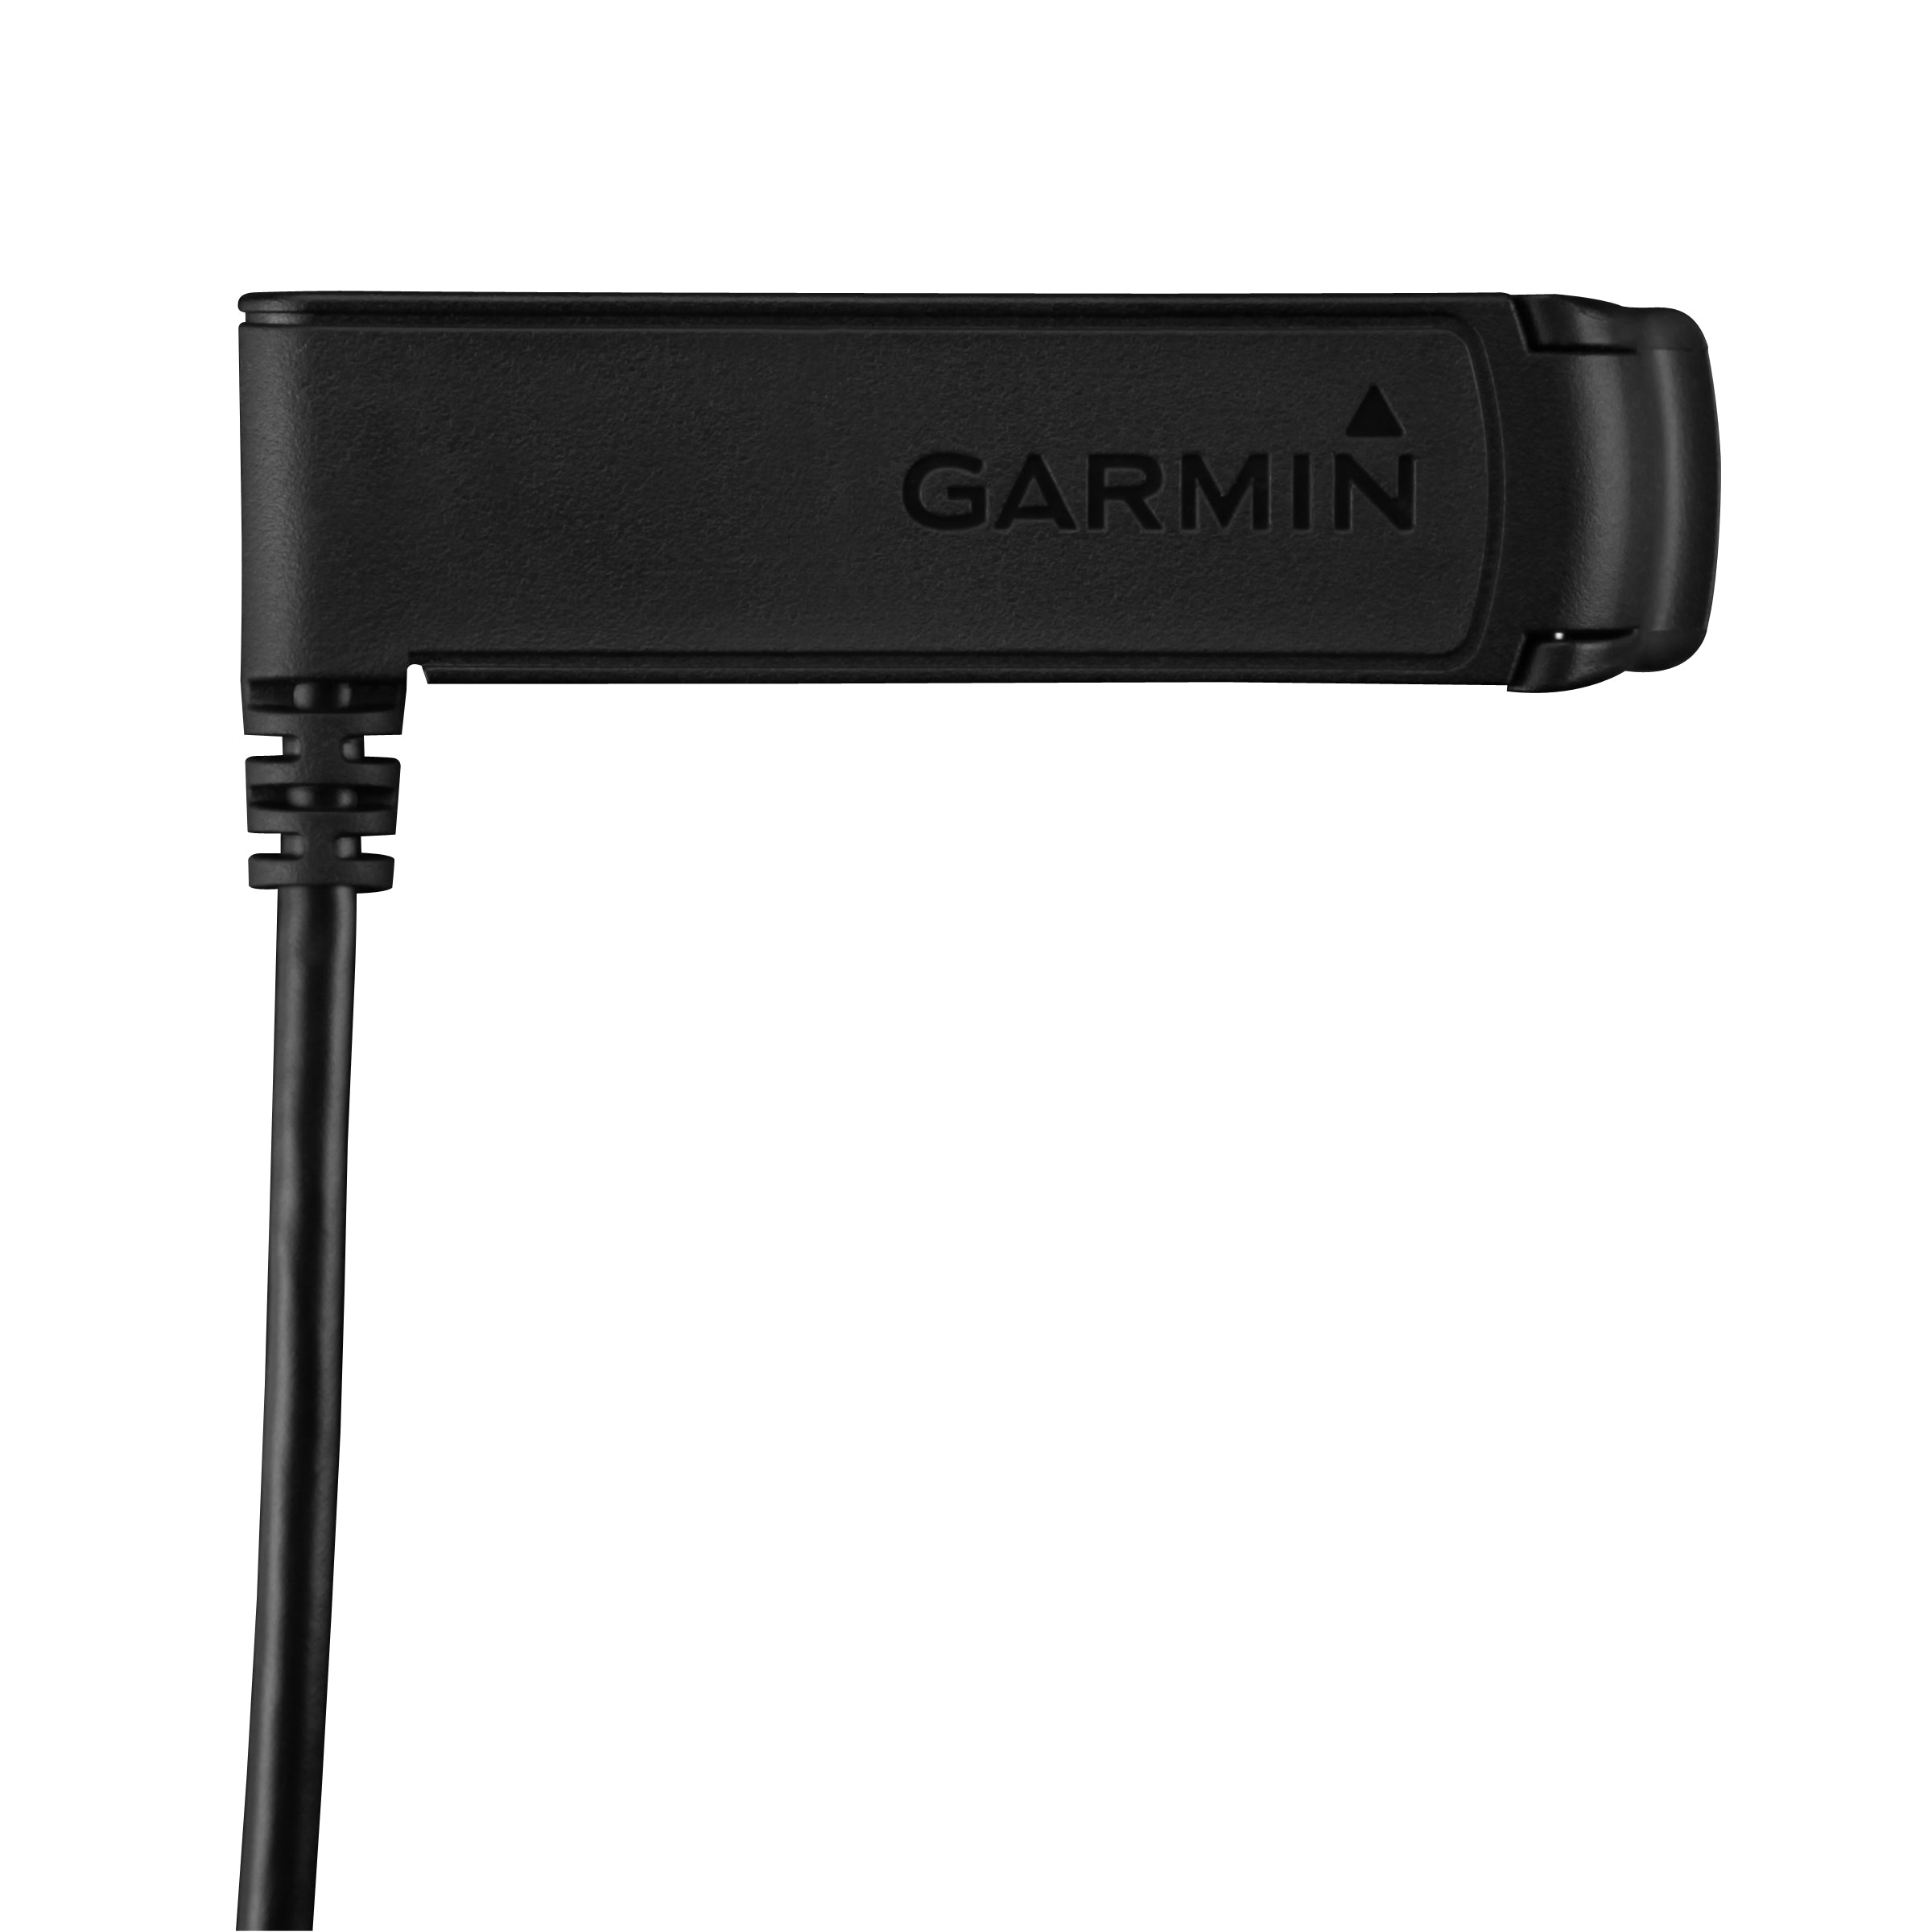 Garmin fēnix USB/charger cable